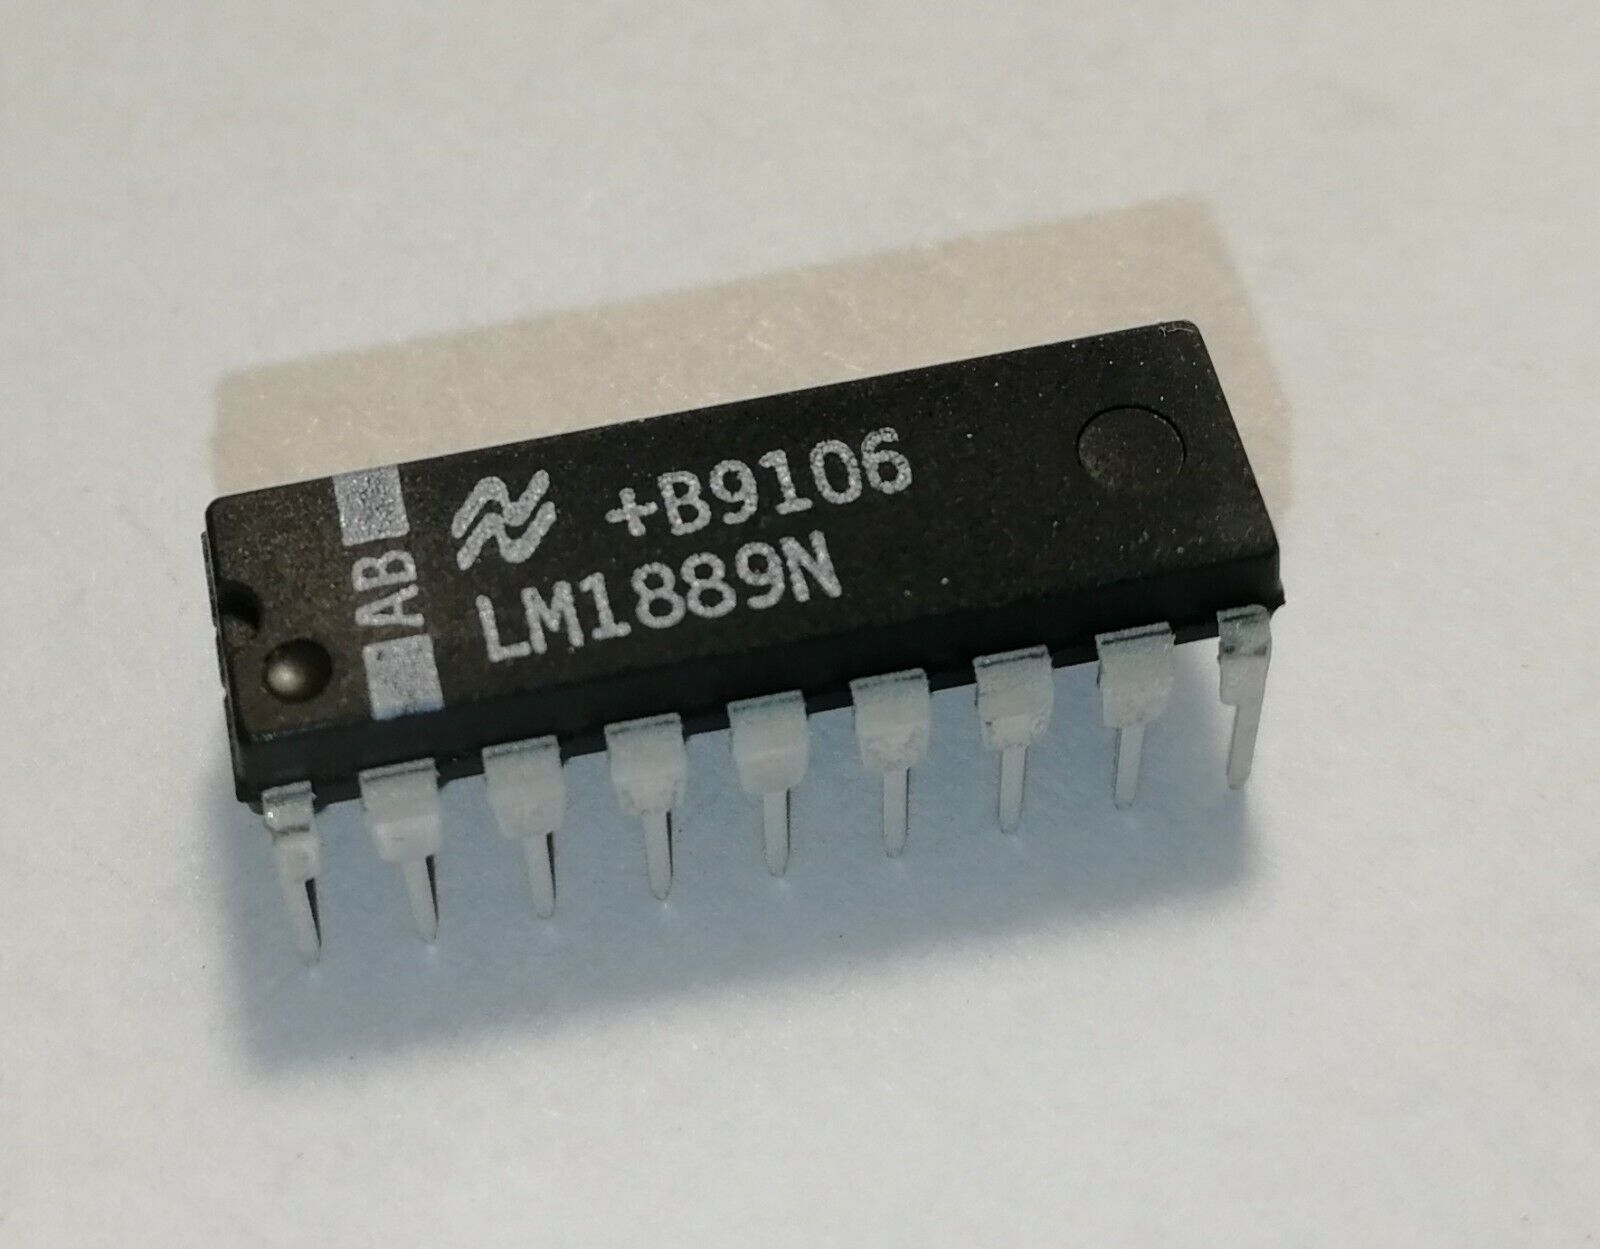 LM1889N - TV video modulator